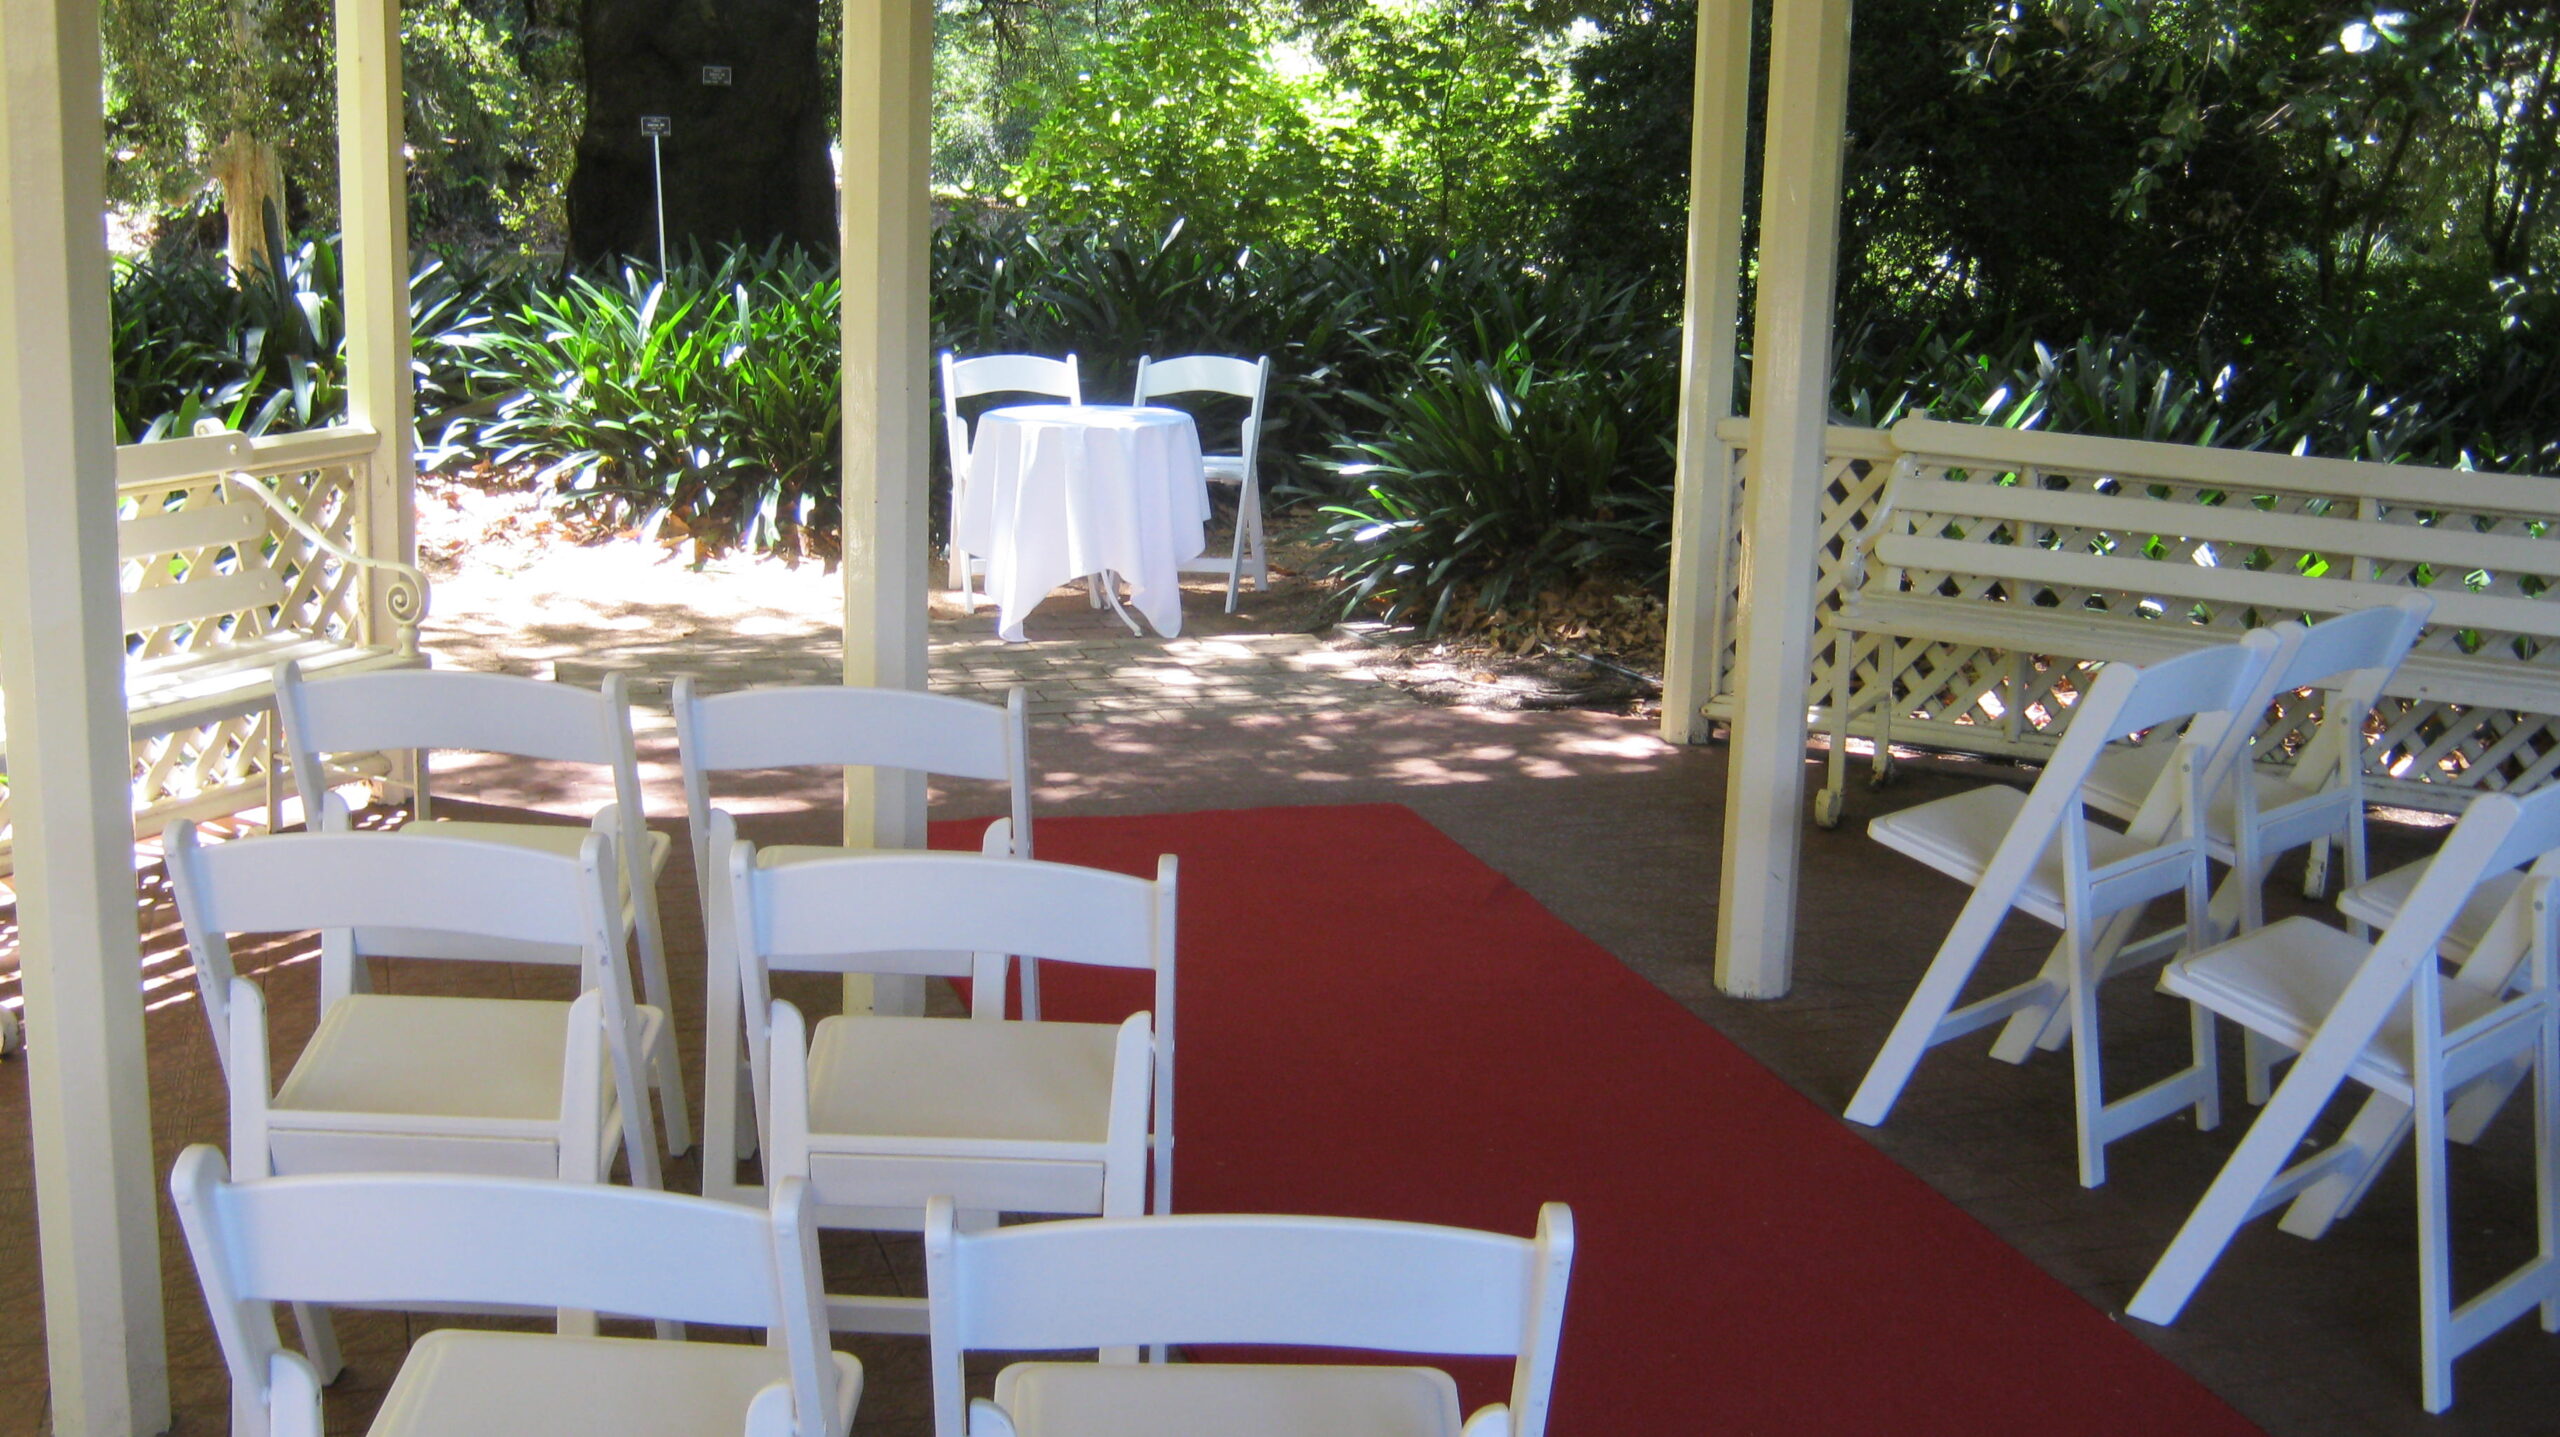 Adelaide Botanic Gardens Ceremony Site : Barbershop